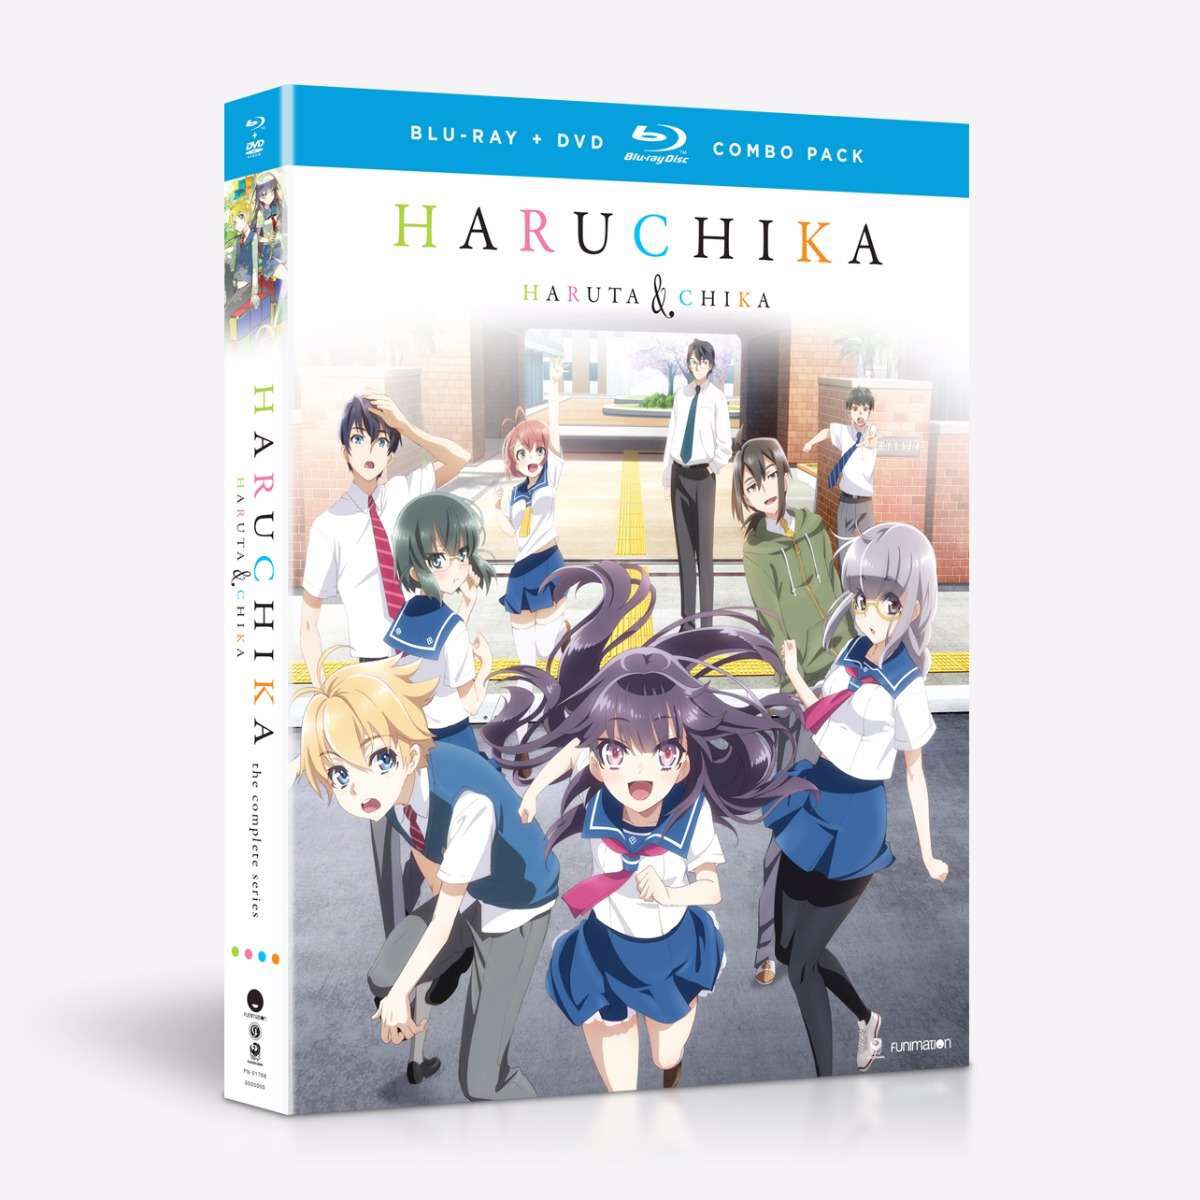 Haruchika - The Complete Series - Blu-ray + DVD | Crunchyroll Store